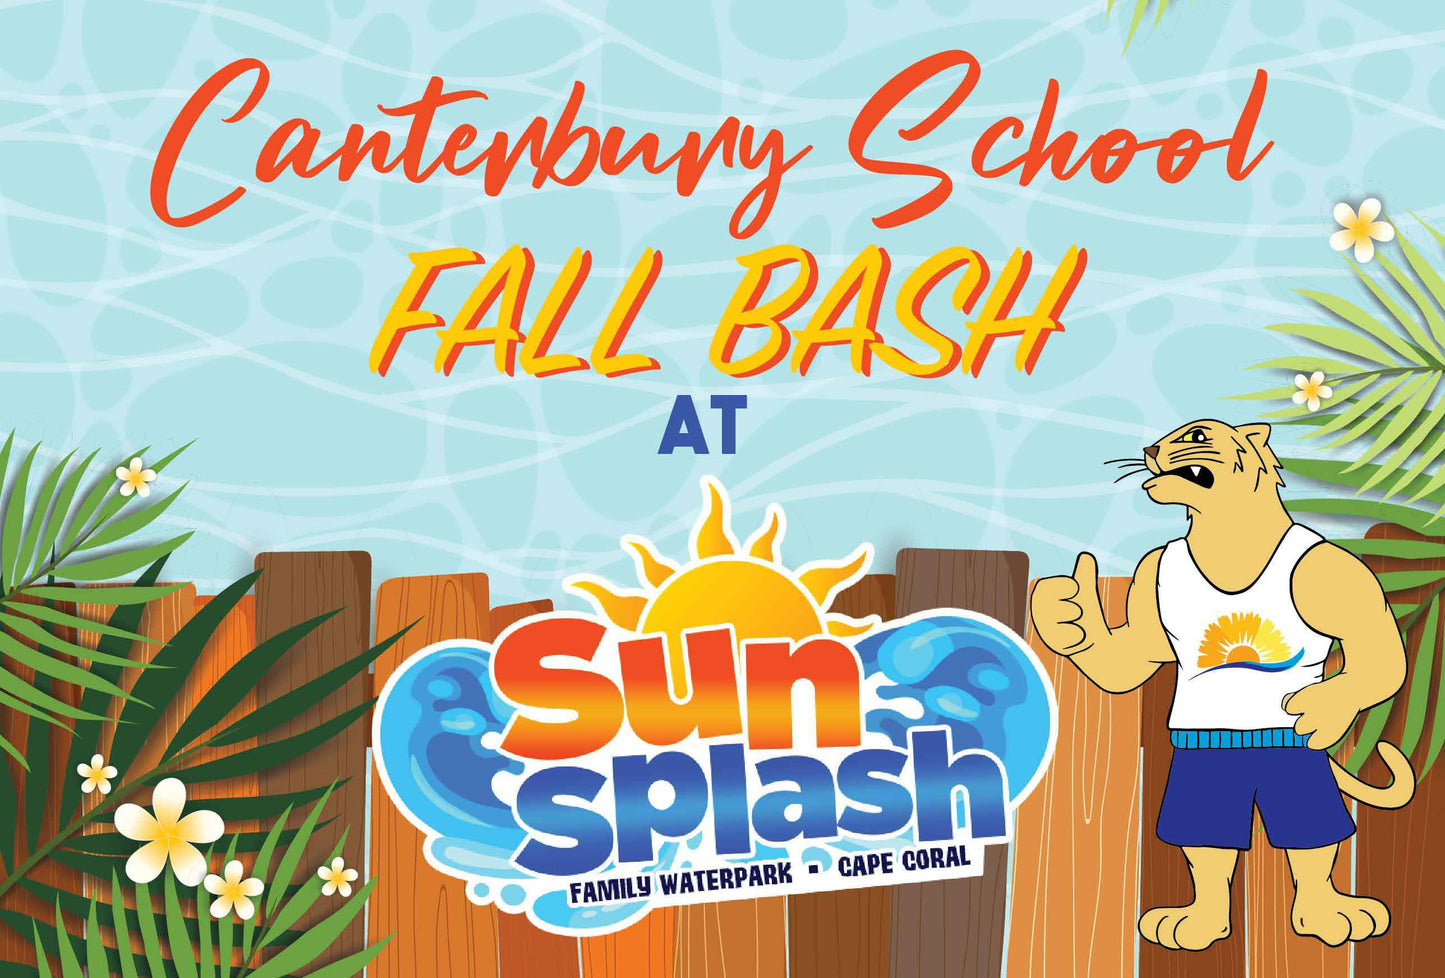 Canterbury School Fall Bash At Sunsplash!!